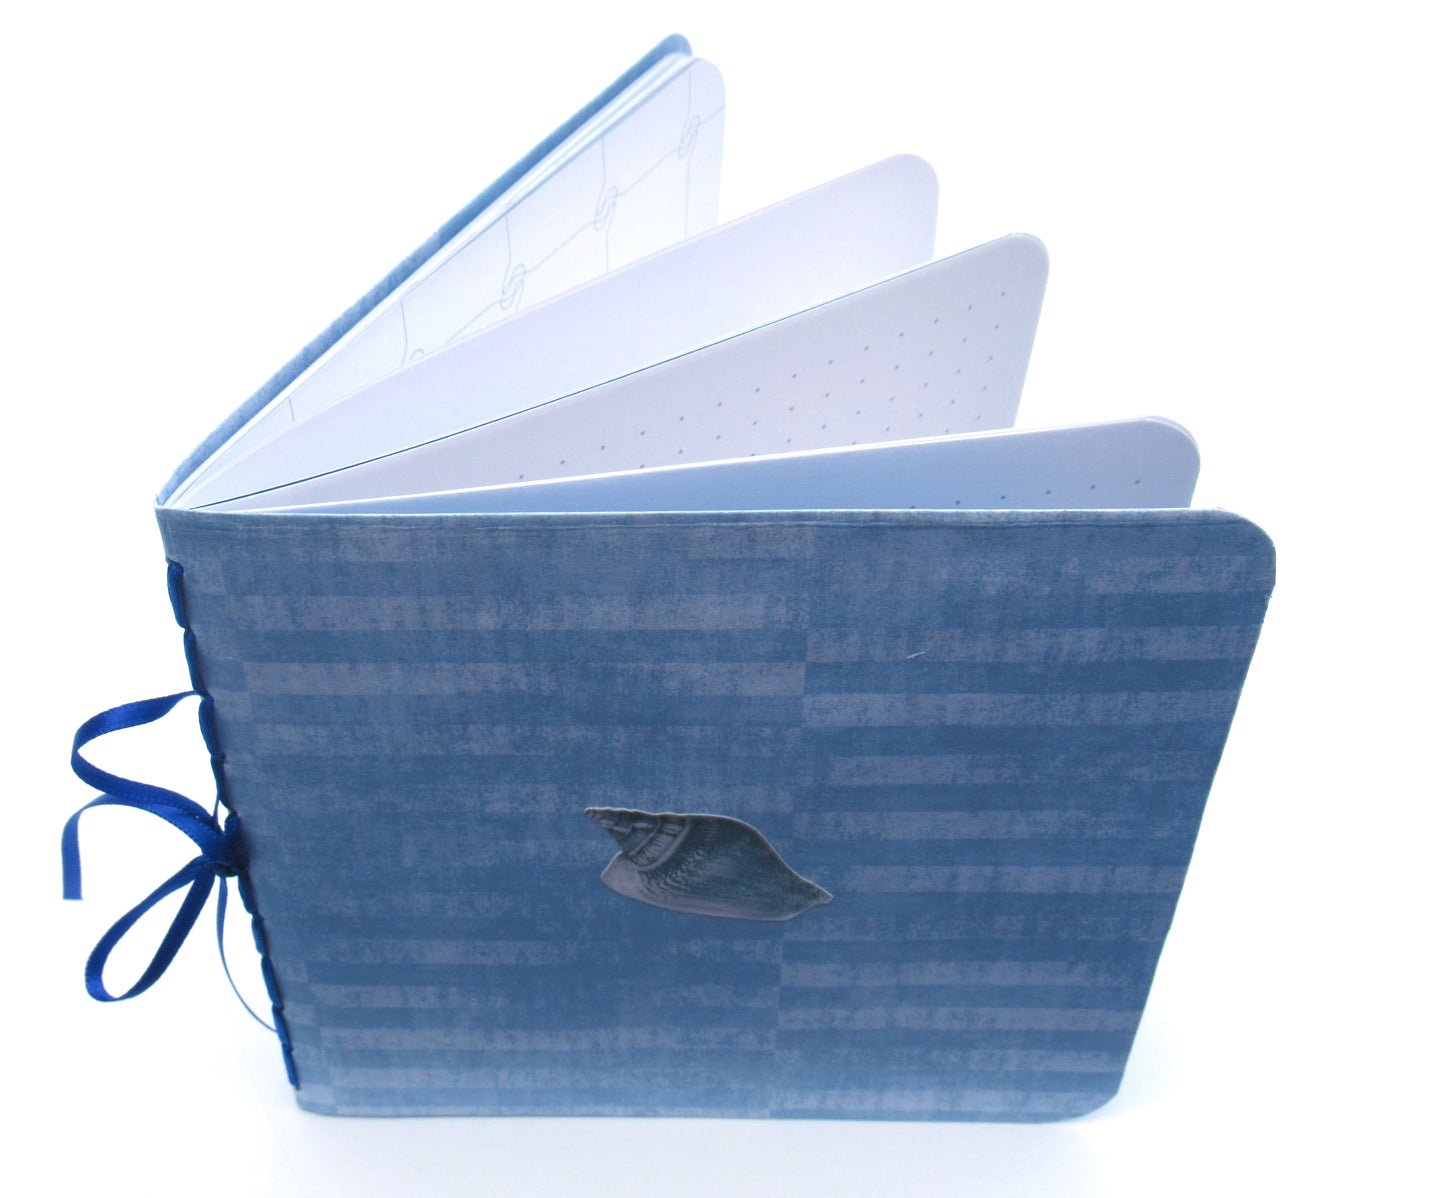 Journal - Handmade JOURNAL - Soft Cover Journal - Handbound Blank Notebook - Gratitude Journal - Seashore Themed Journal - Stationery - Literacy Project - 110